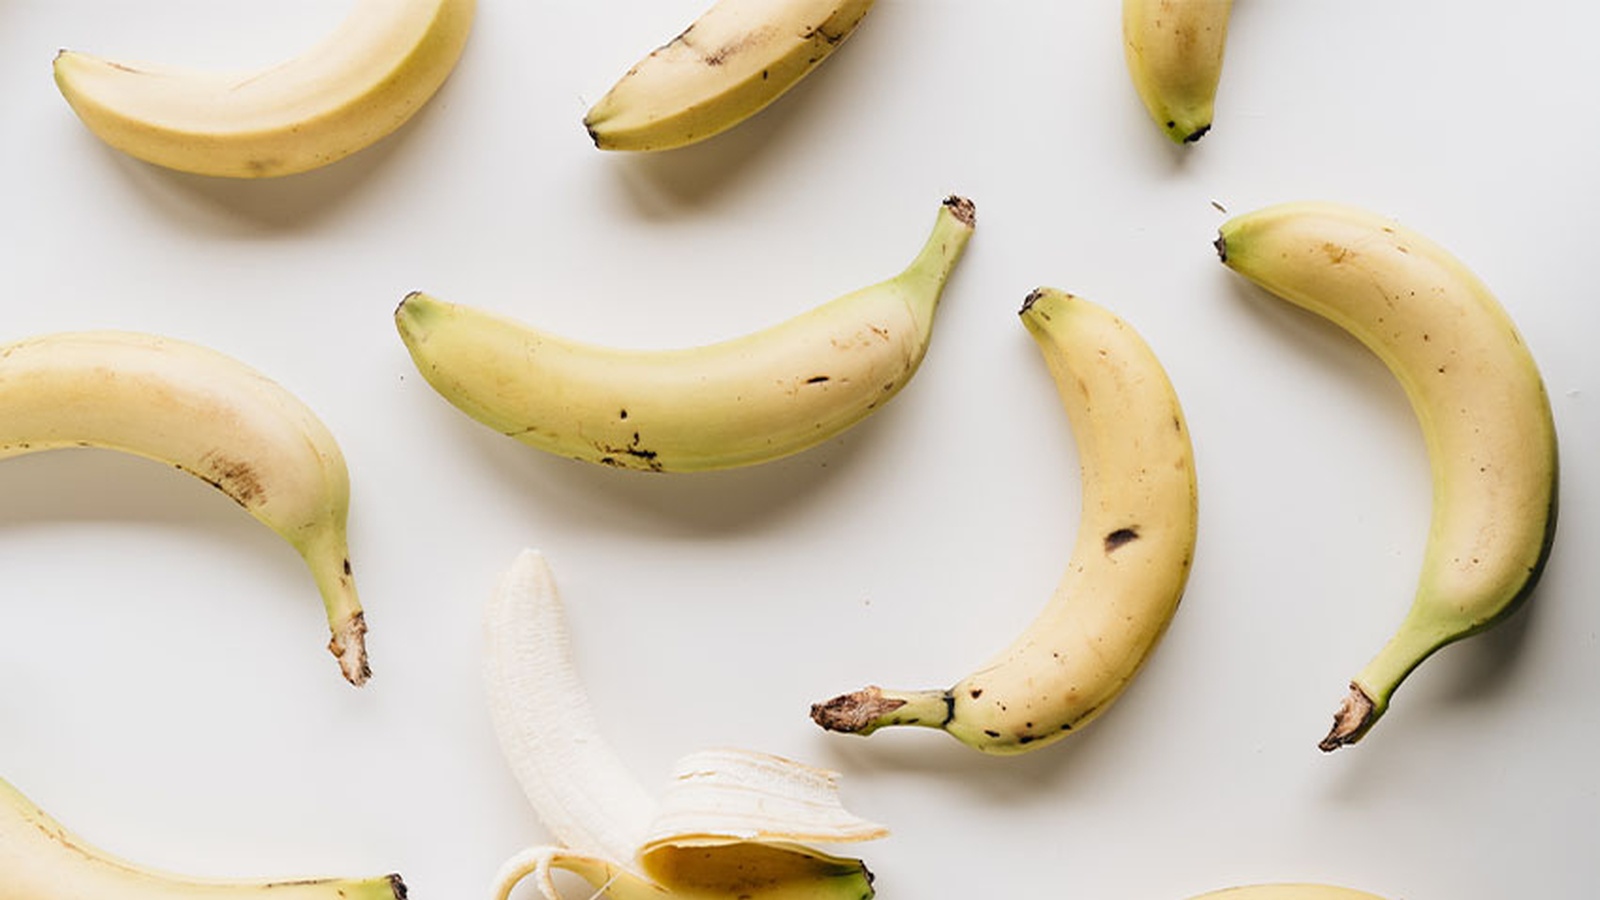 6 Surprising Uses of Banana Peels